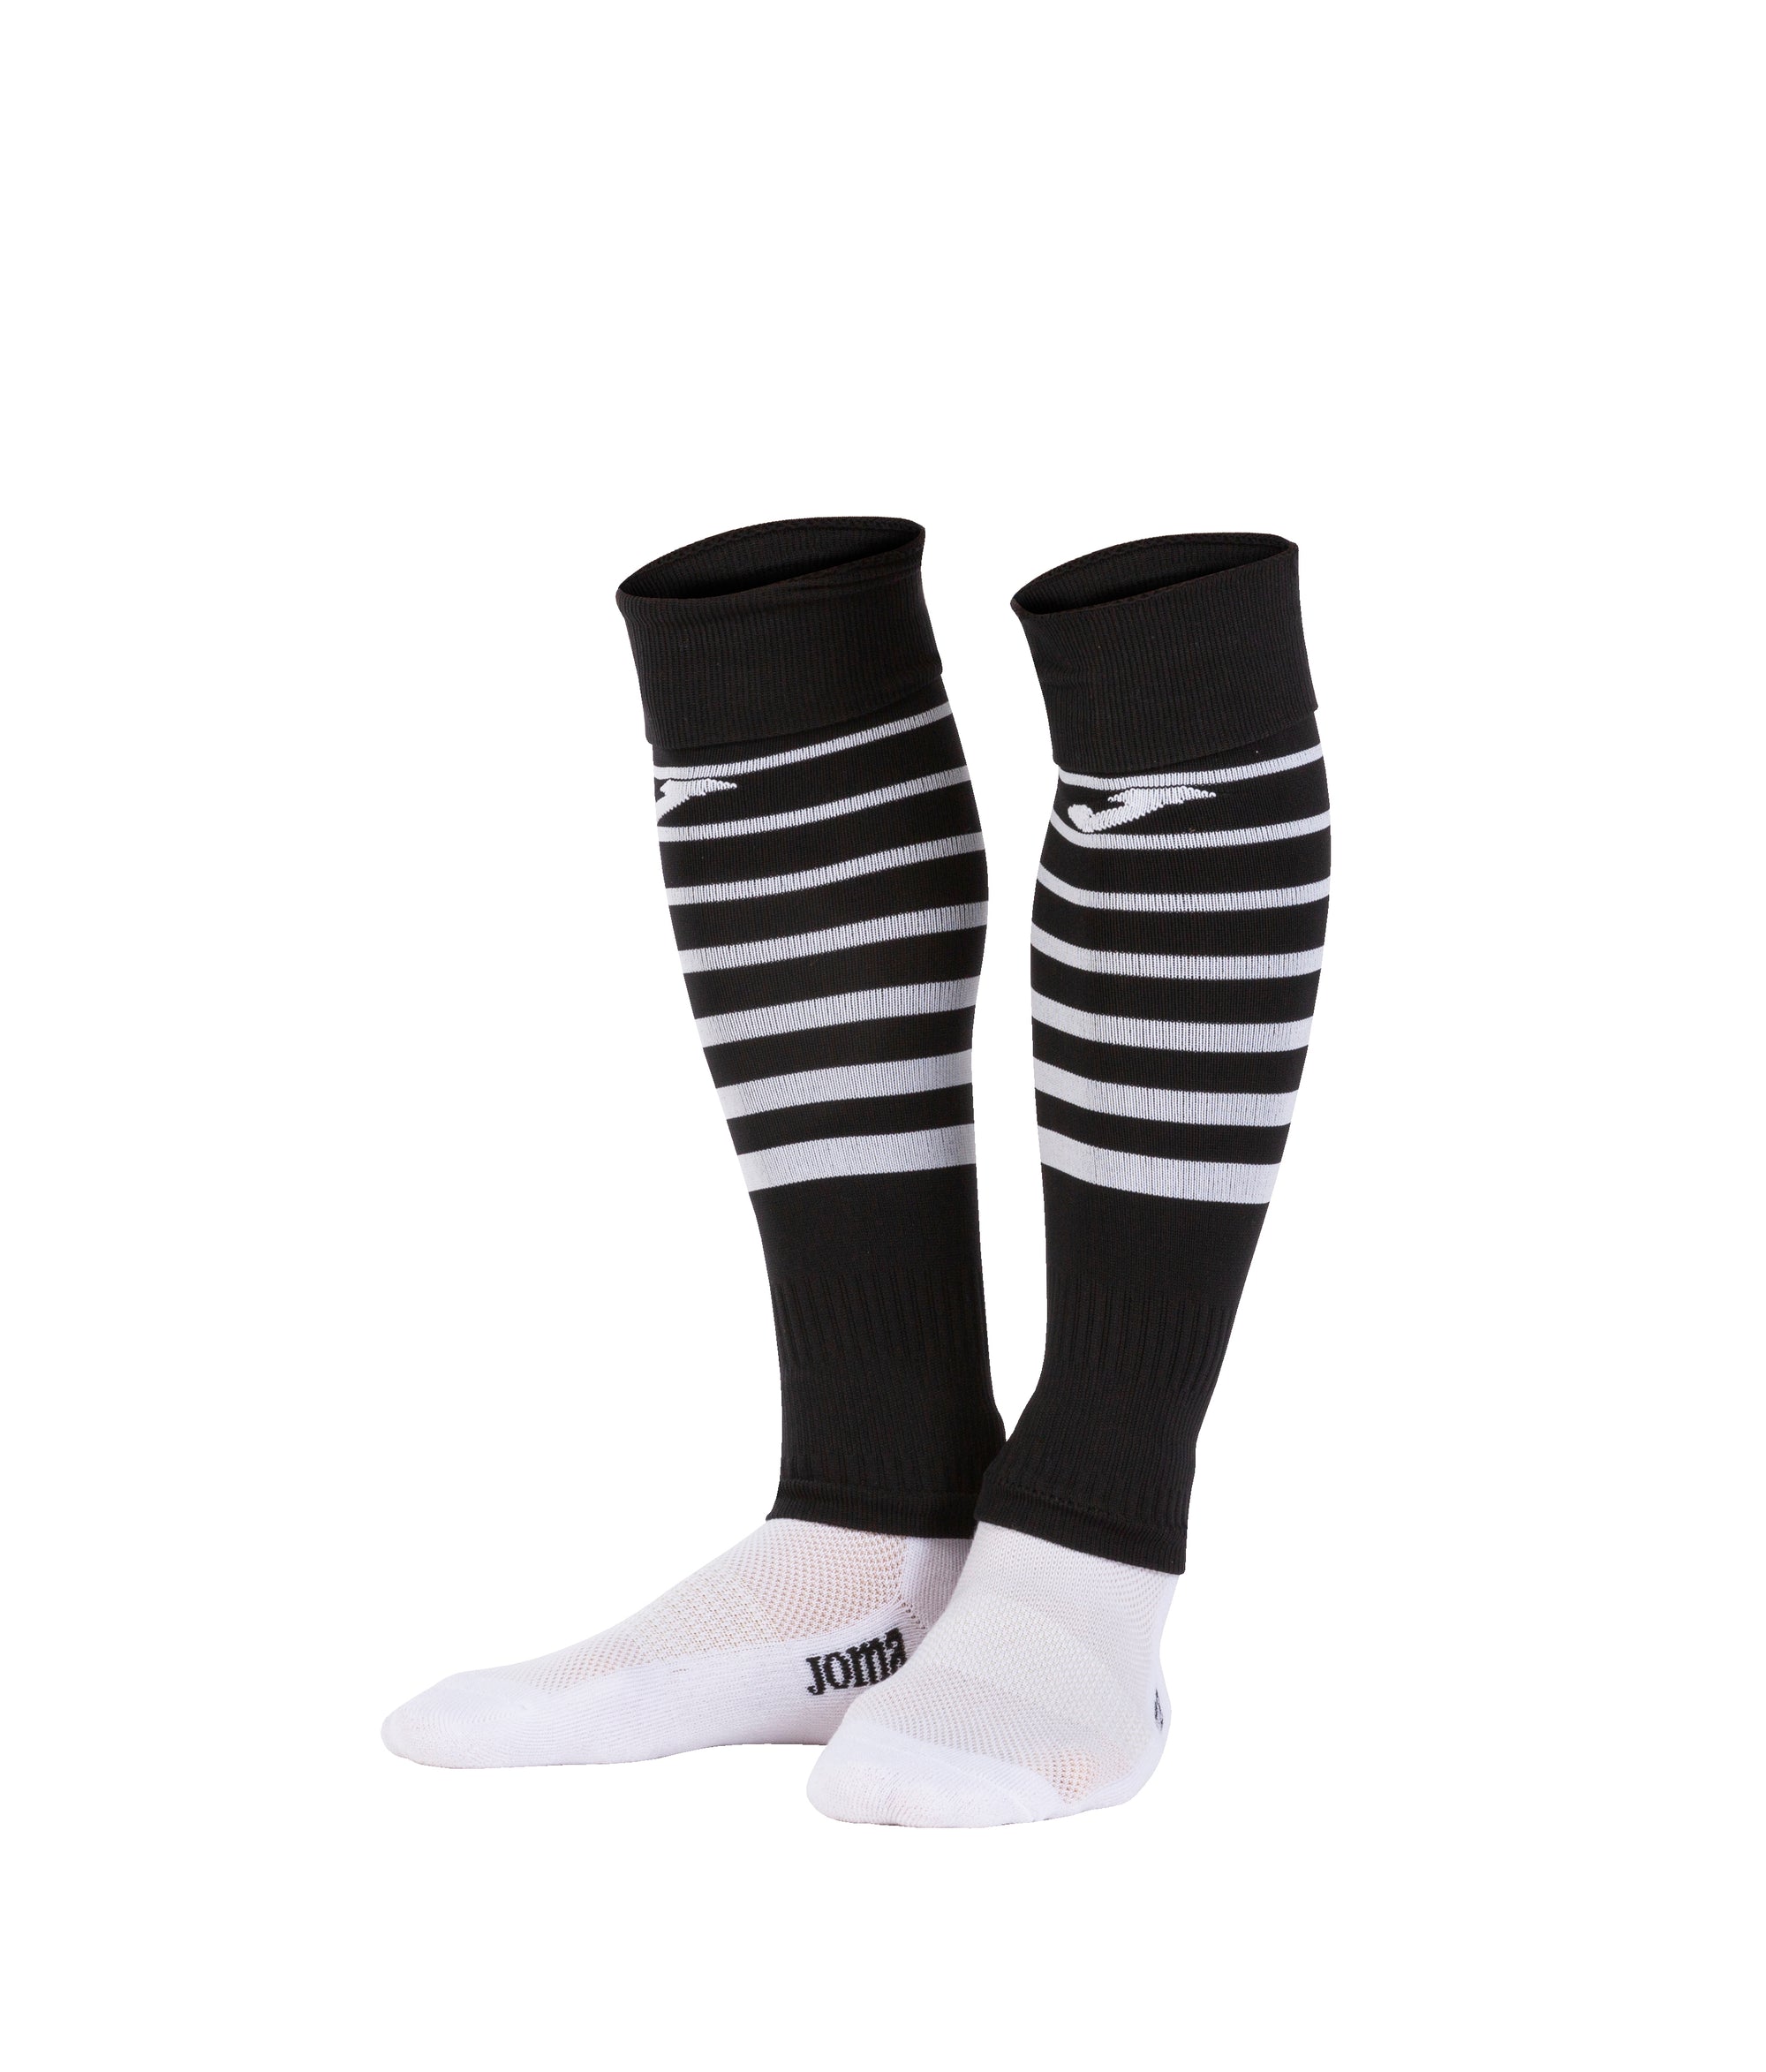 Joma Premier II Sock Leg - Black/White